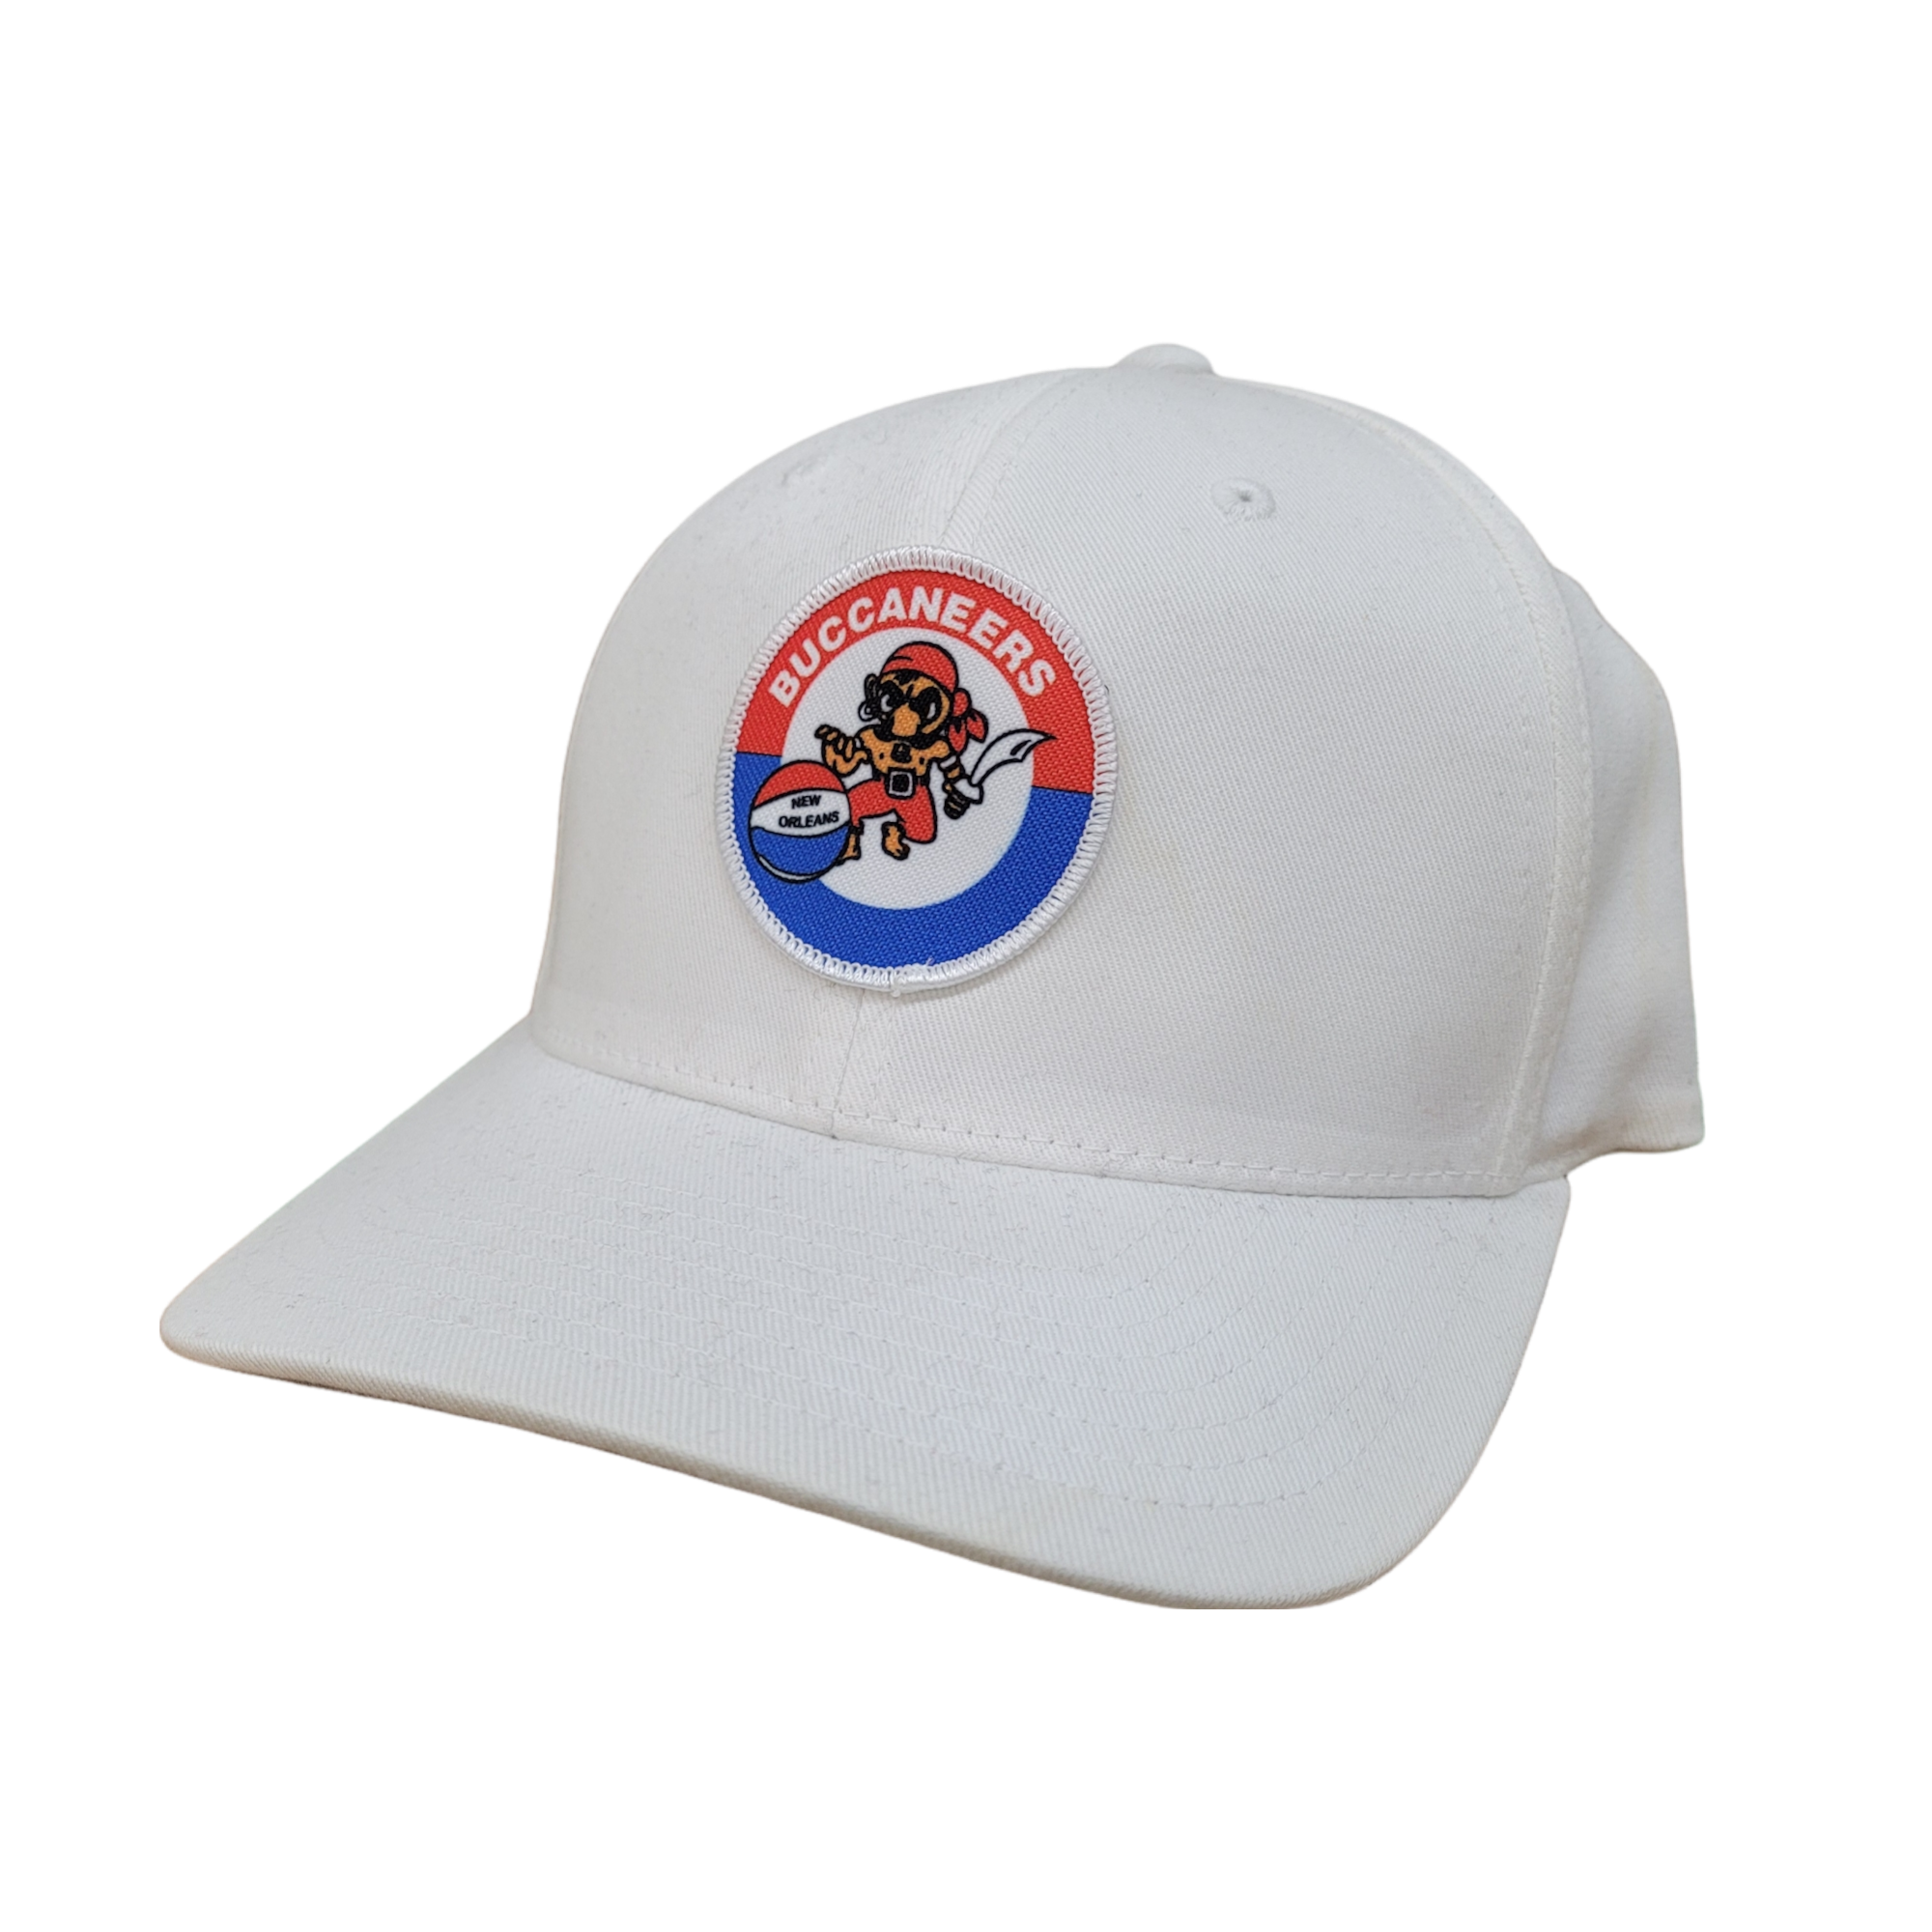 New Orleans Buccaneers ABA Hat